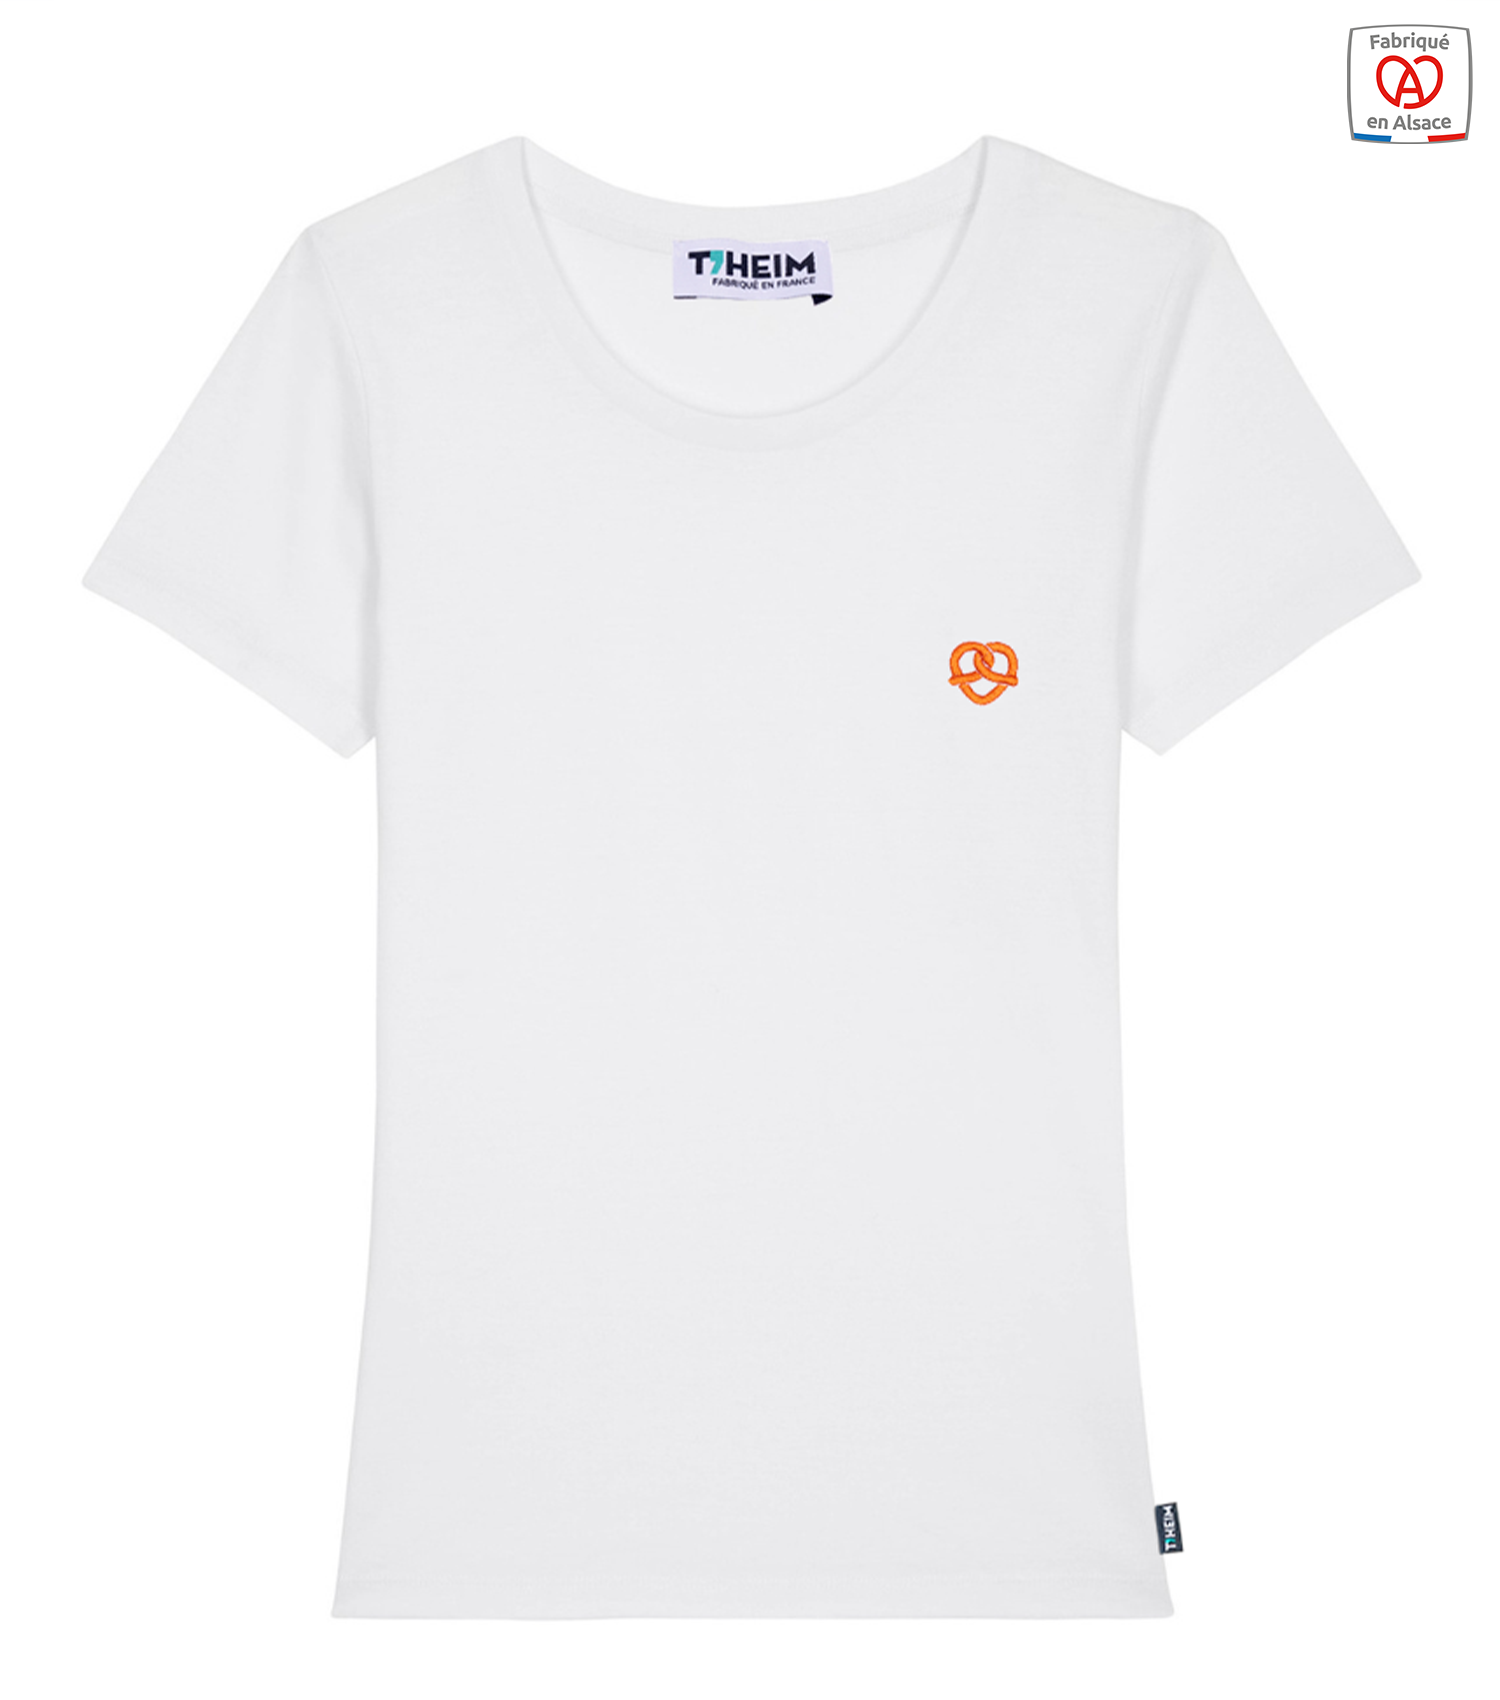 theim-t-shirt-femme-blanc-bretzel-made-in-france-1500x1700px